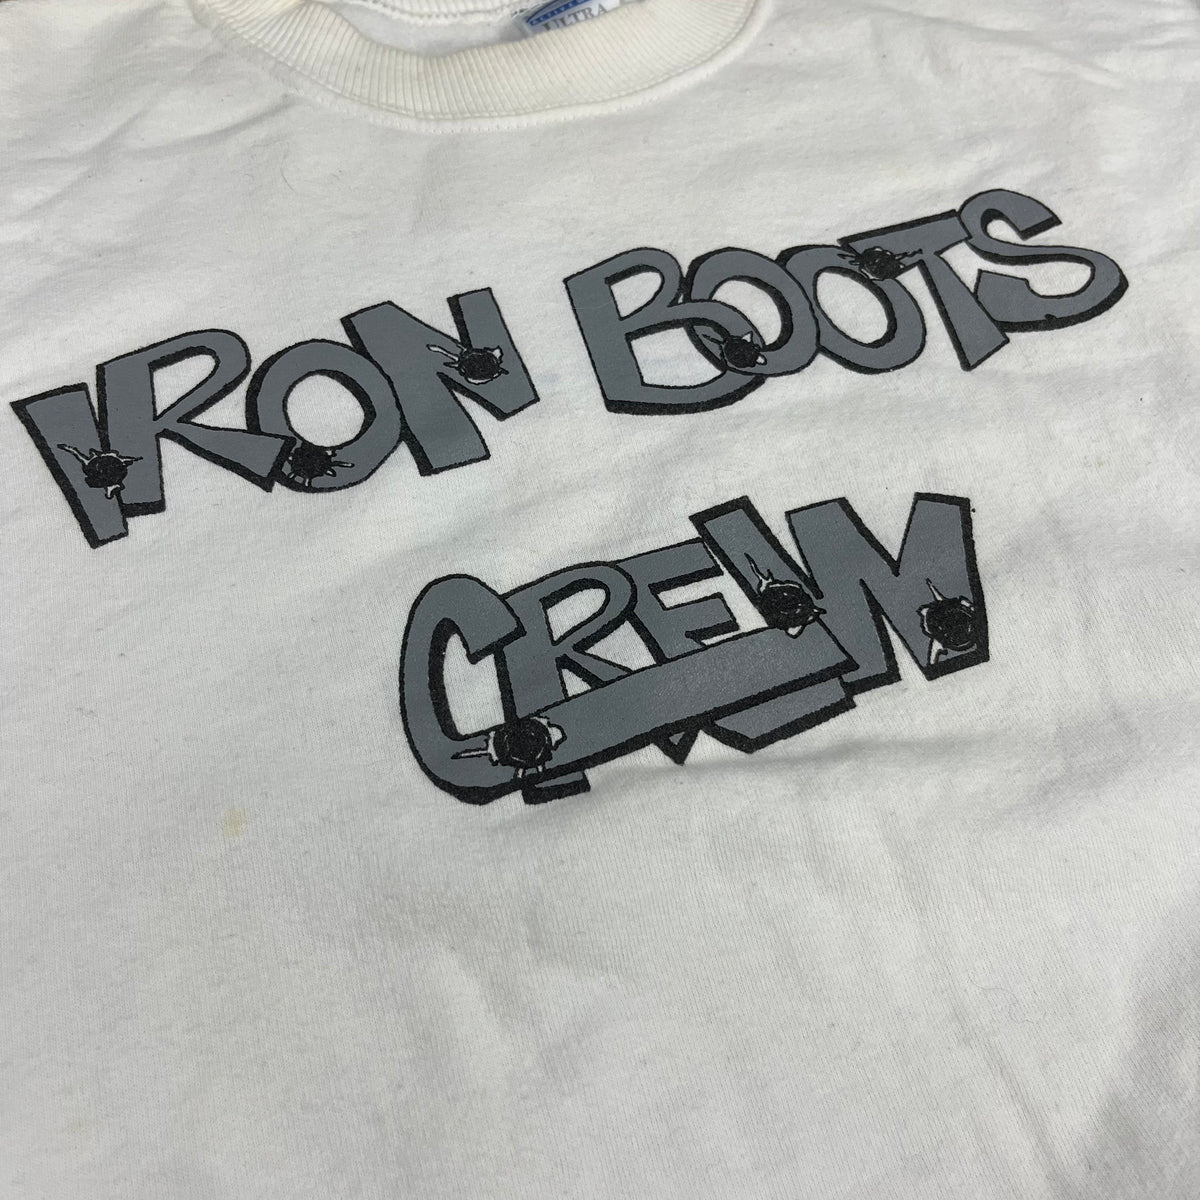 Vintage Iron Boots Crew Crewneck Sweatshirt